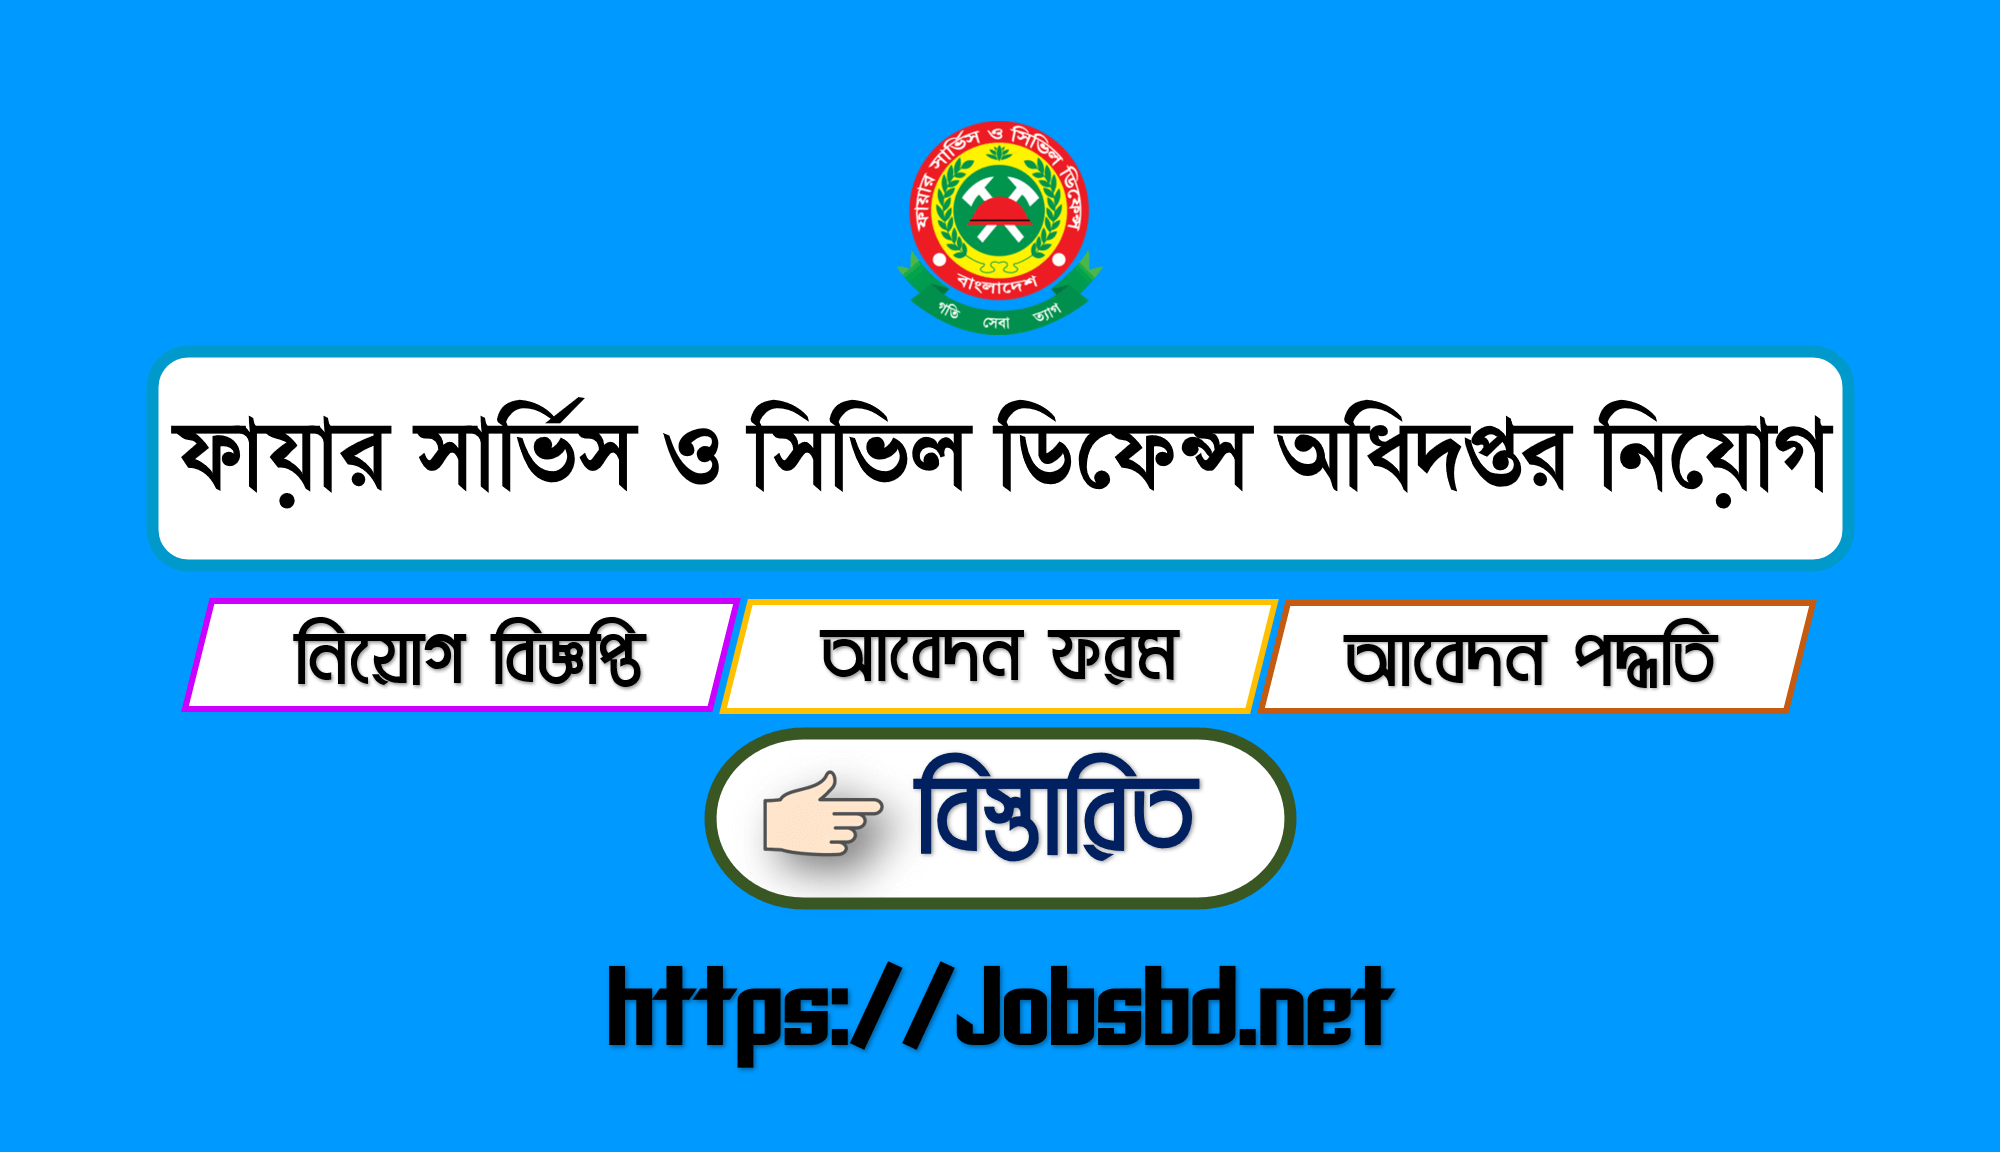 Bangladesh Fire Service and Civil Defence Department Job Circular